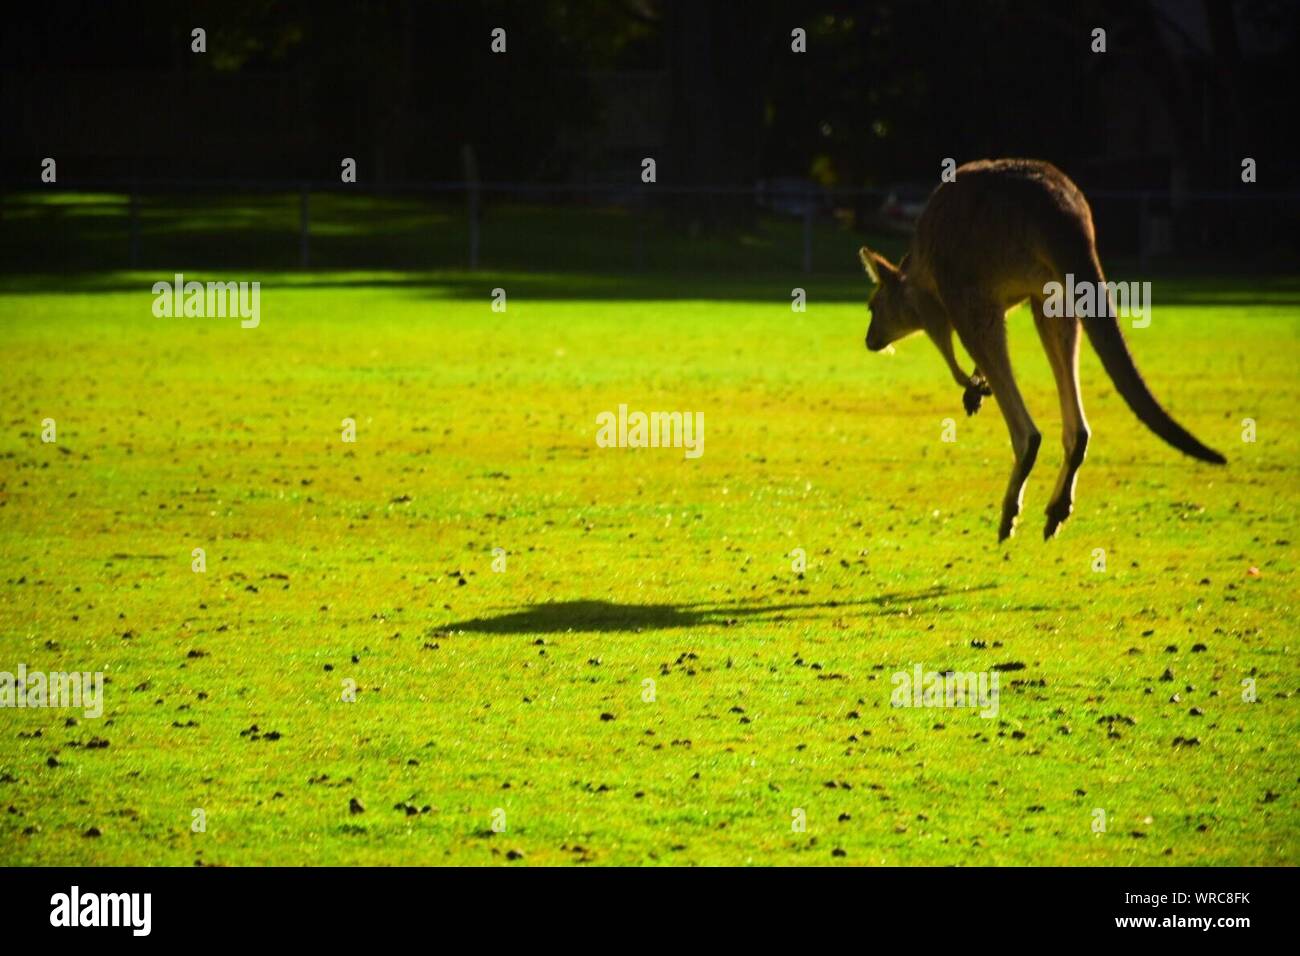 Kangaroo Hopping On Grassy Field Stock Photo